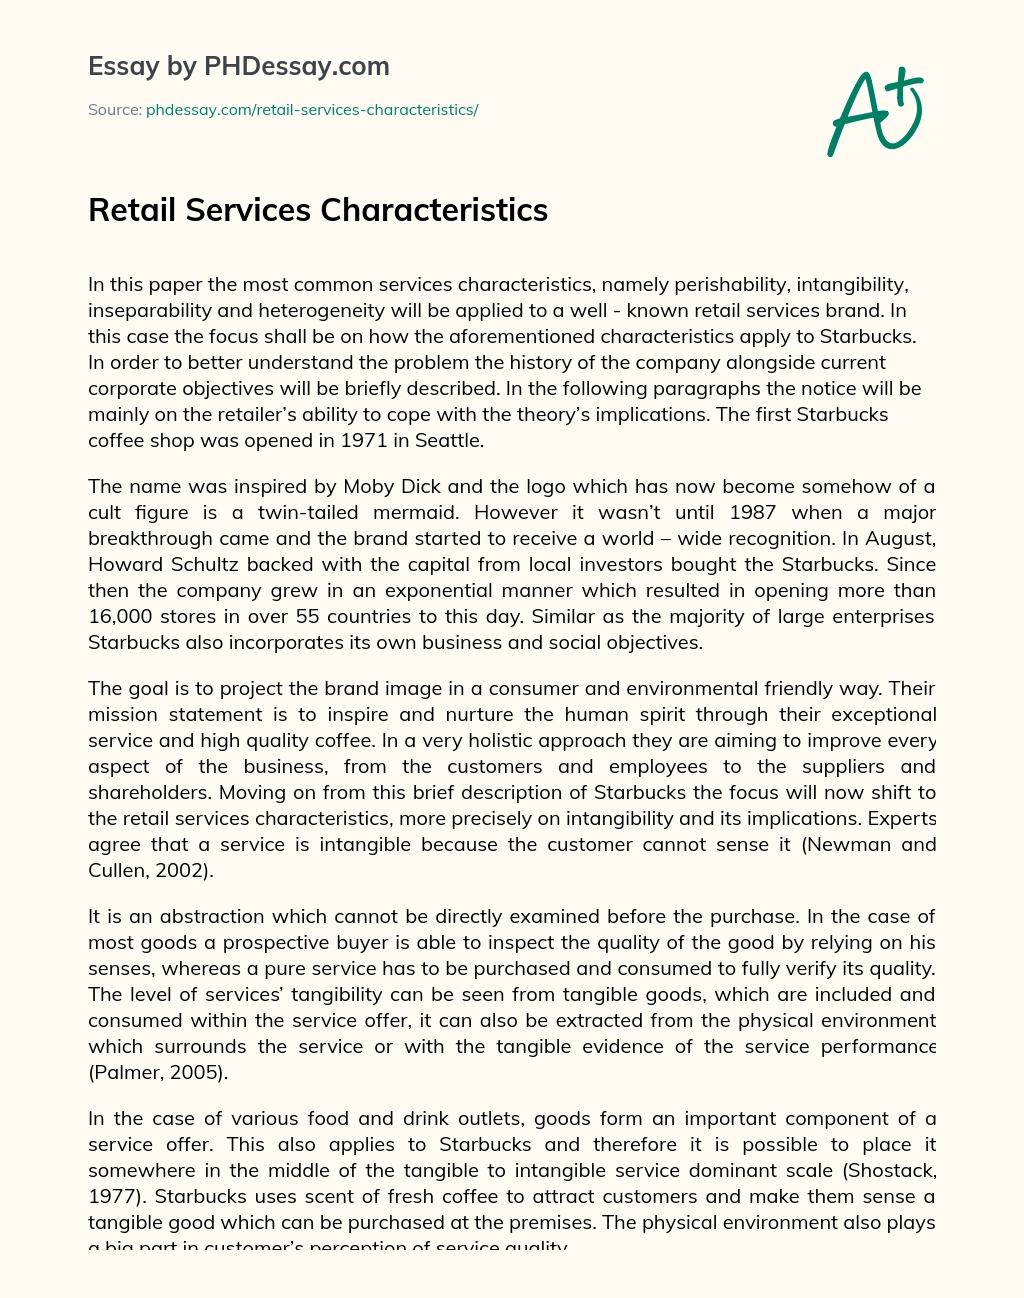 Retail Services Characteristics essay